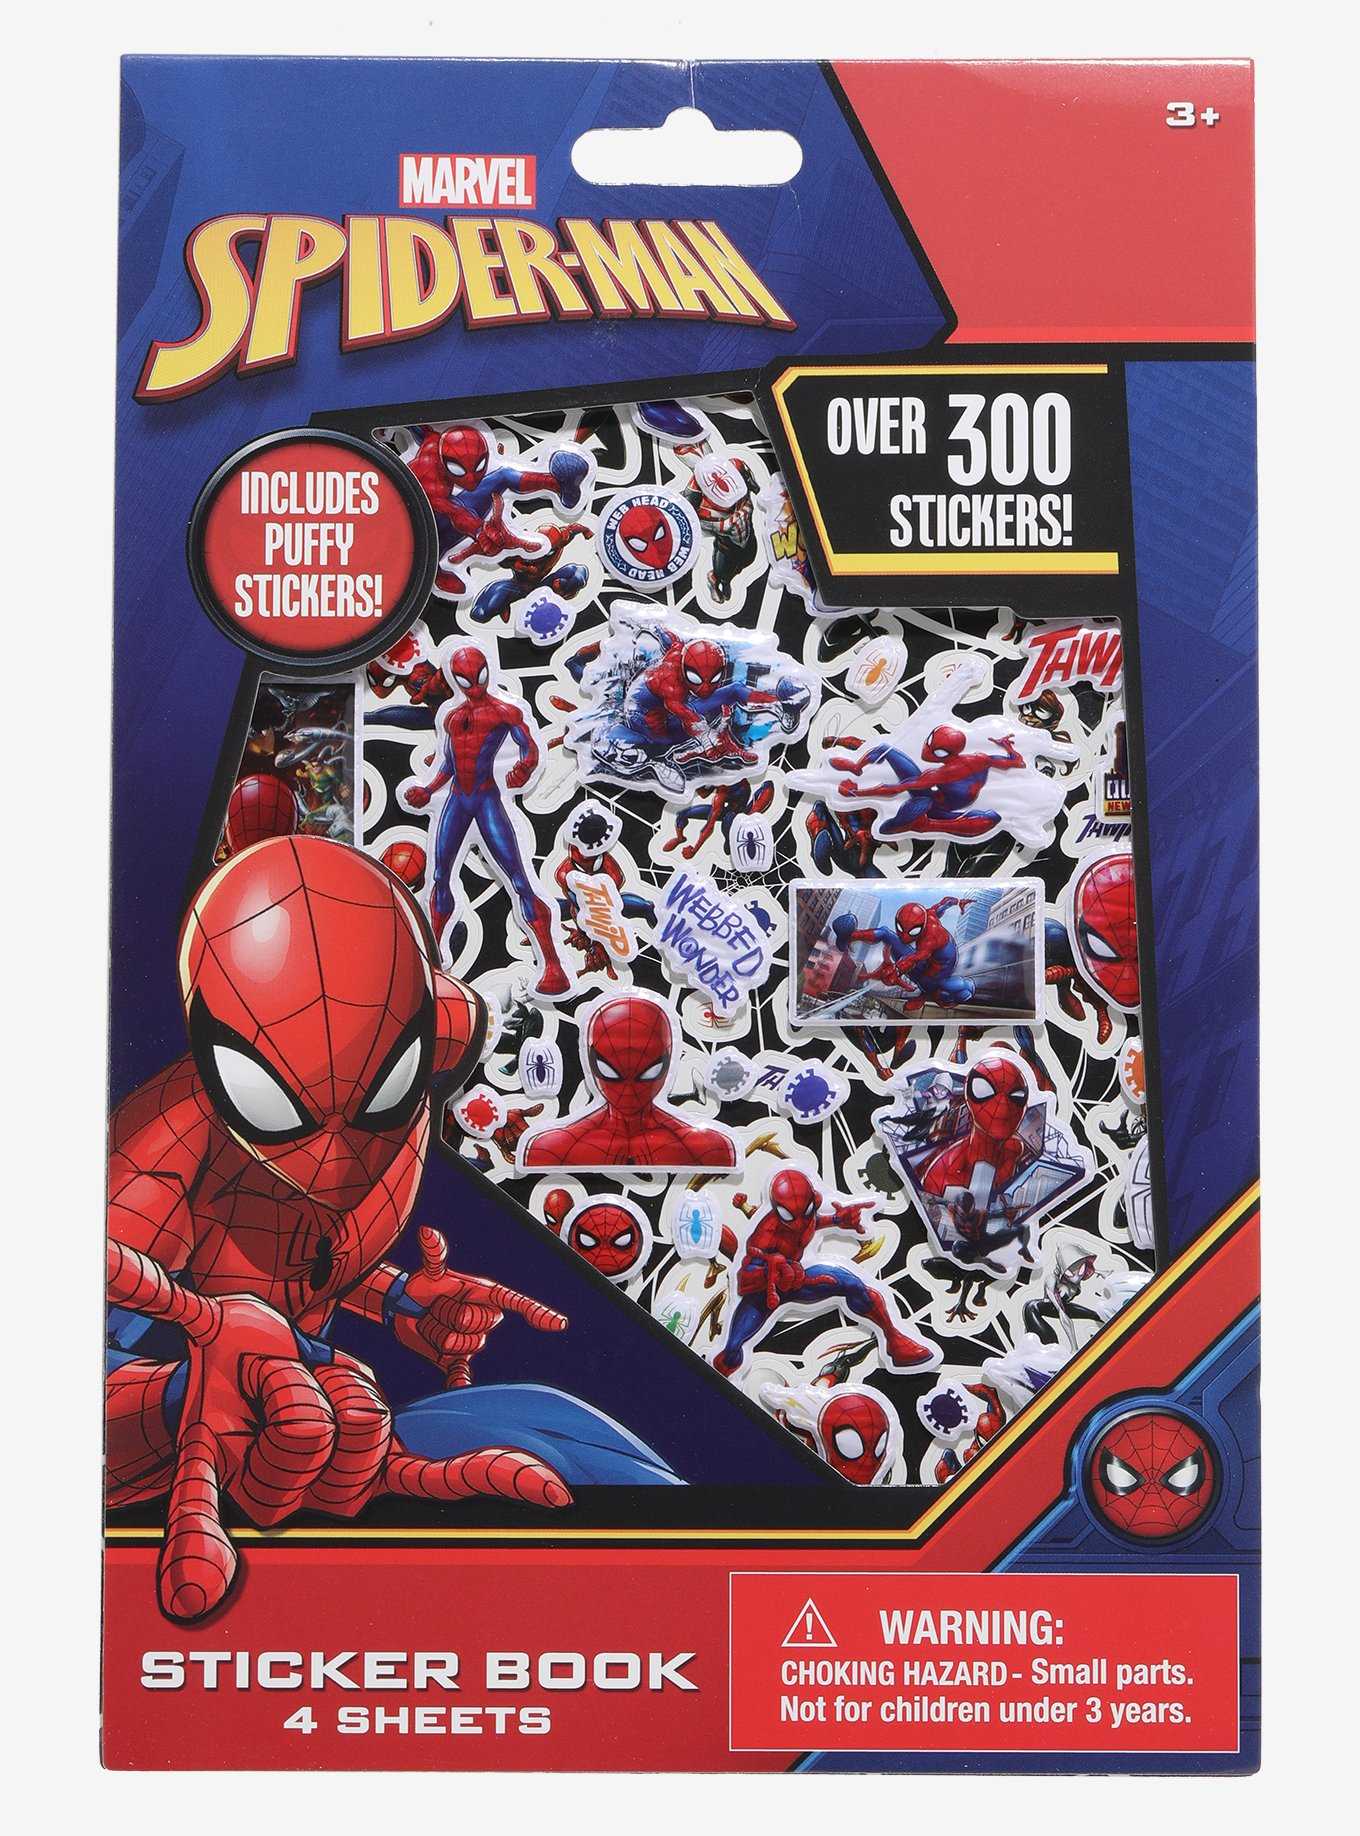 Will they bring back the Spider Undies suit in Spider-Man 2? :  r/SpidermanPS4